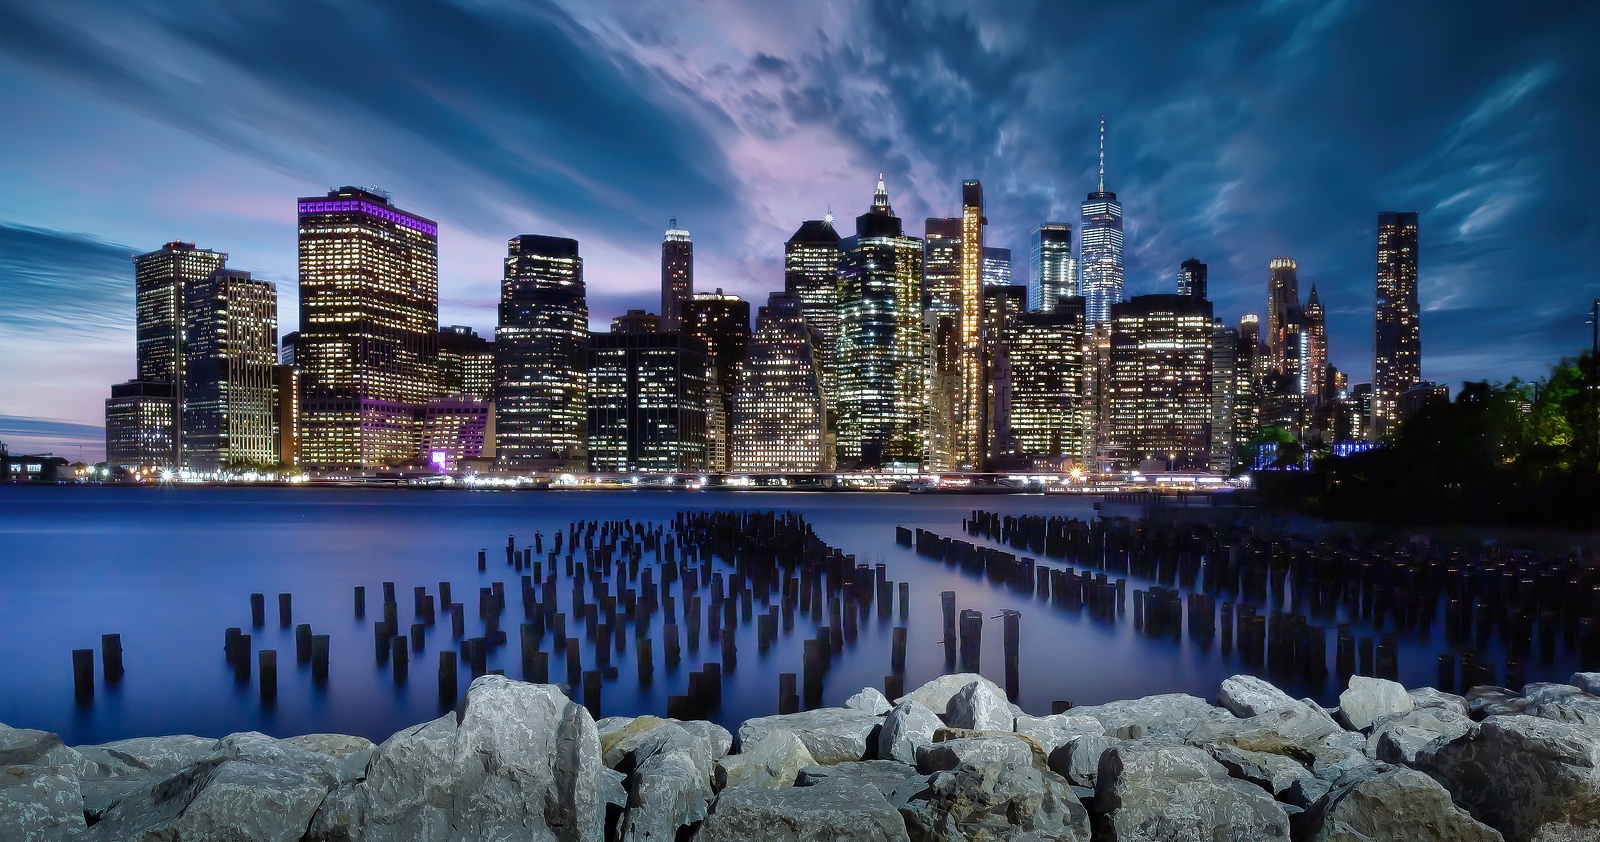 Top 10 New York City Photo Spots - Part 1